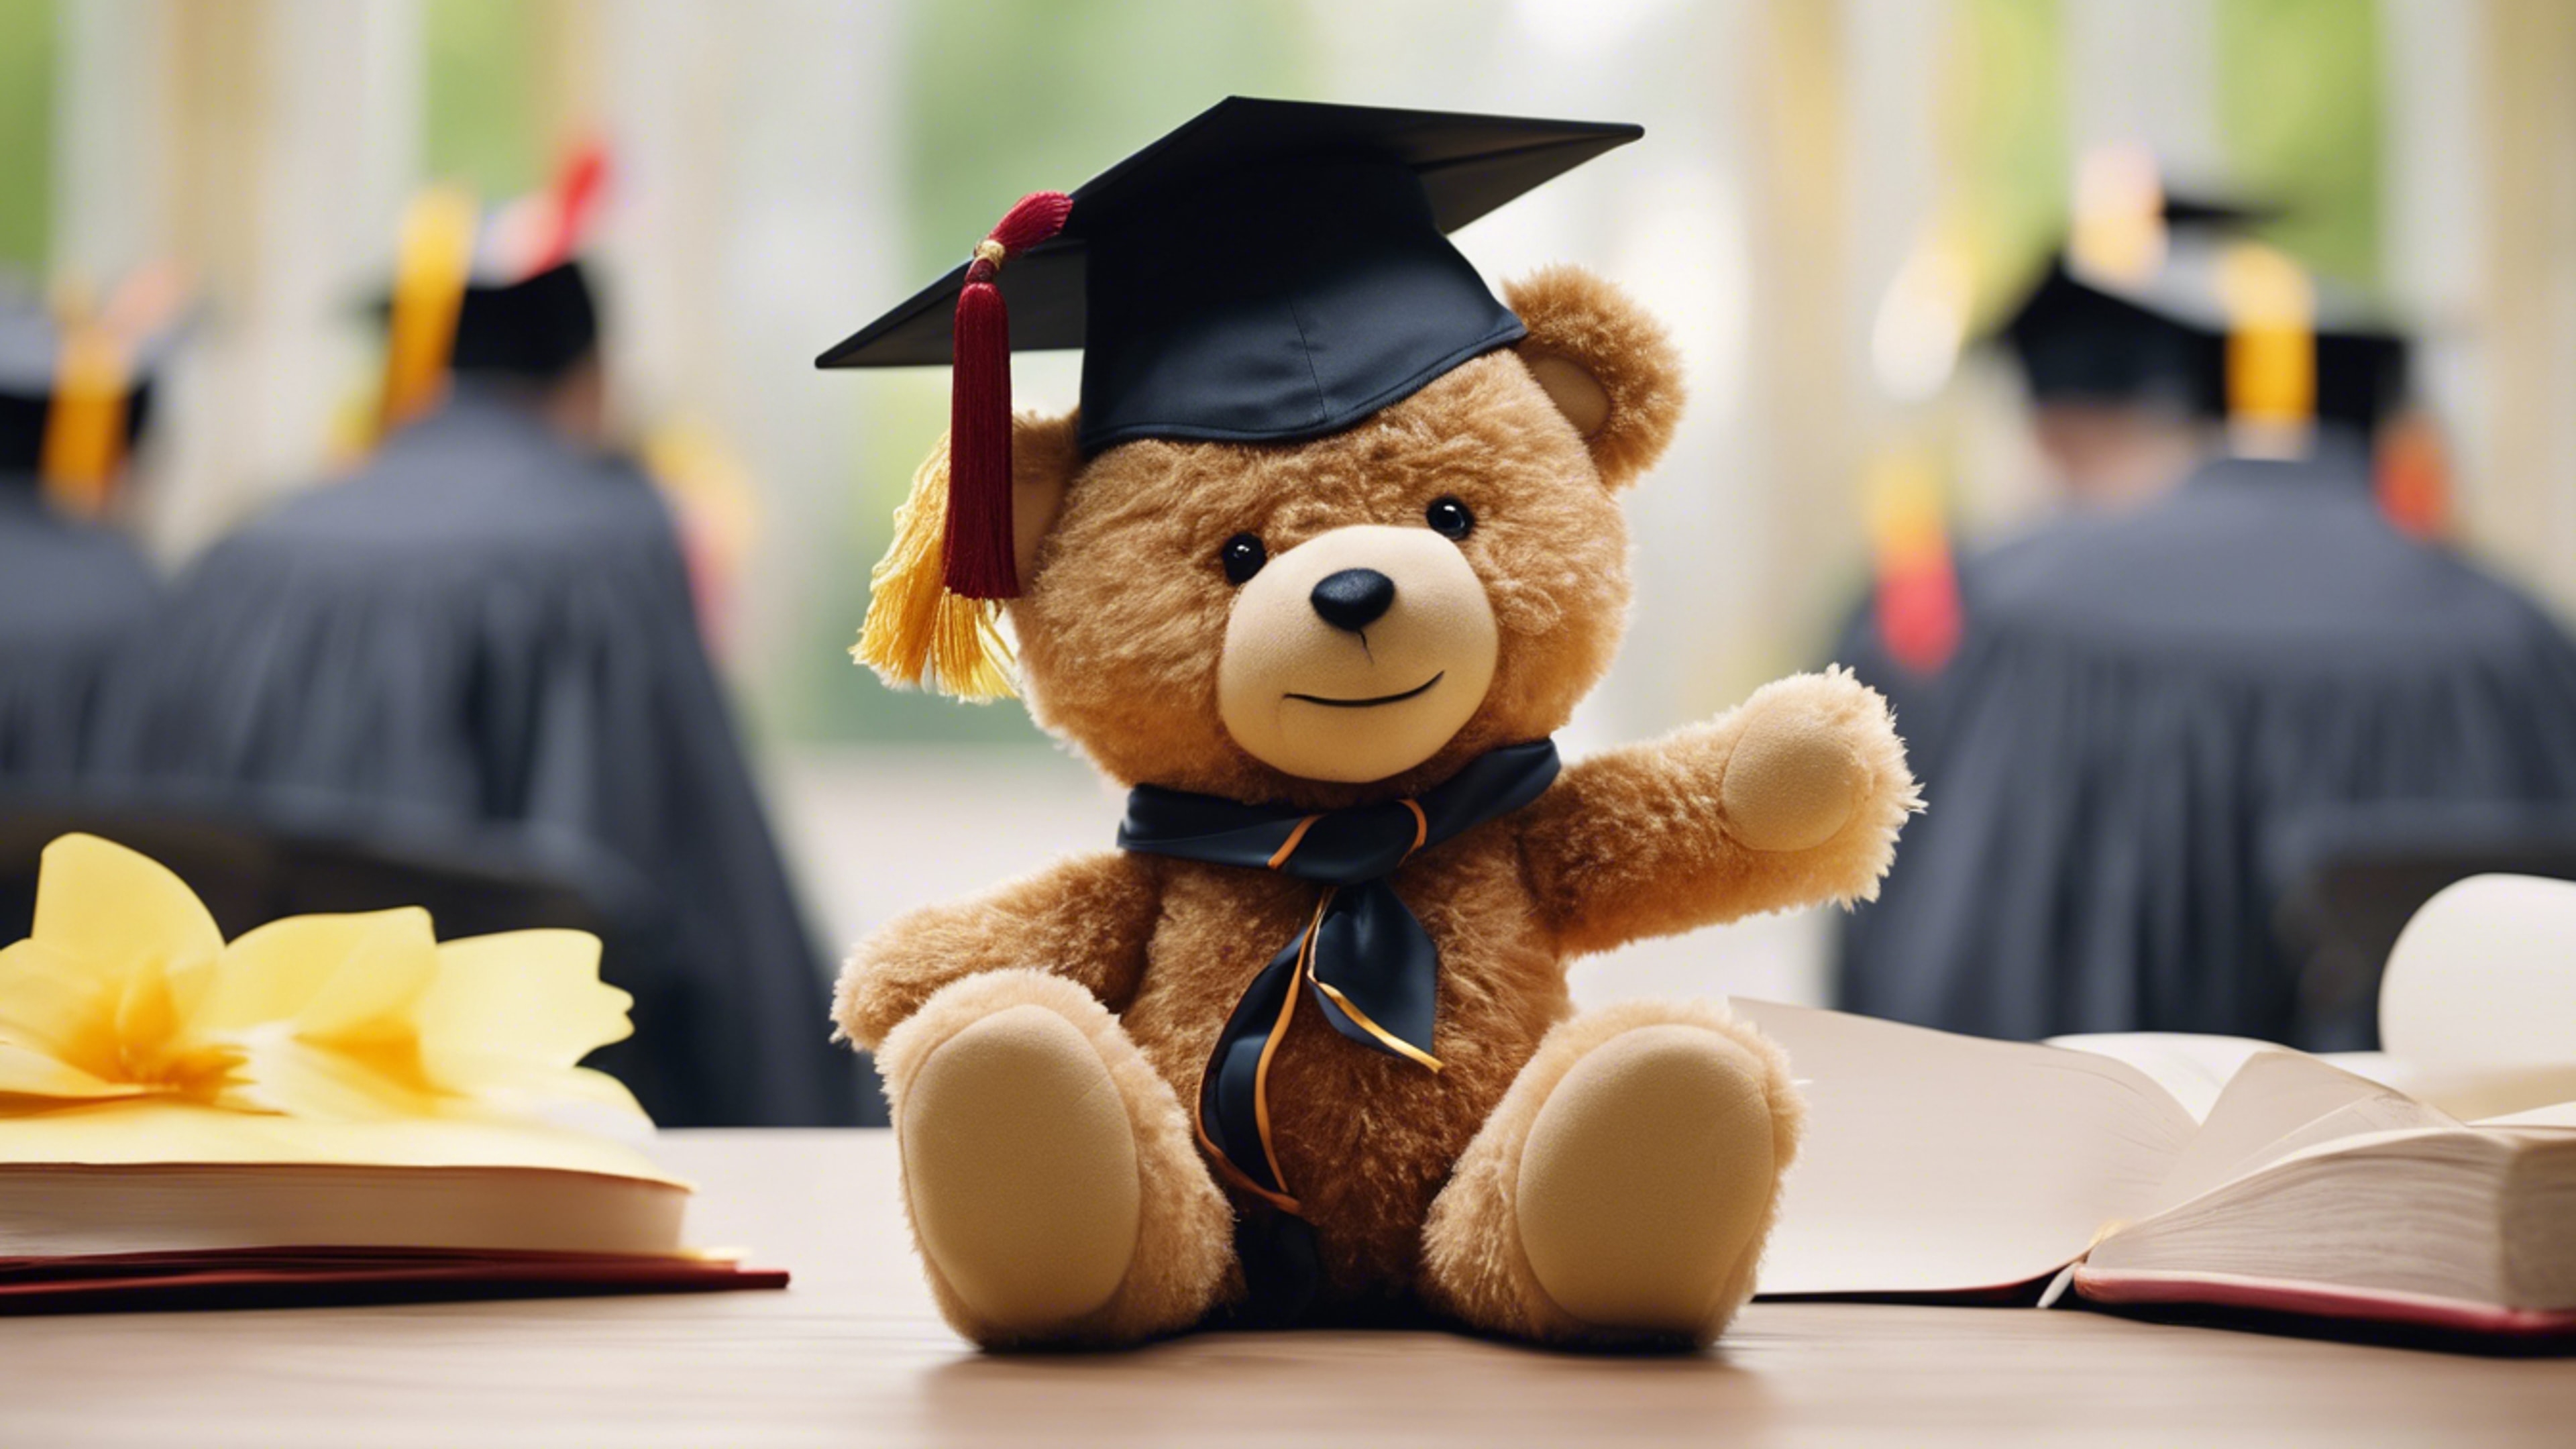 A teddy bear wearing graduation cap and diploma, amidst a graduation ceremony. Tapetai[88eefa047aa0490a9f74]